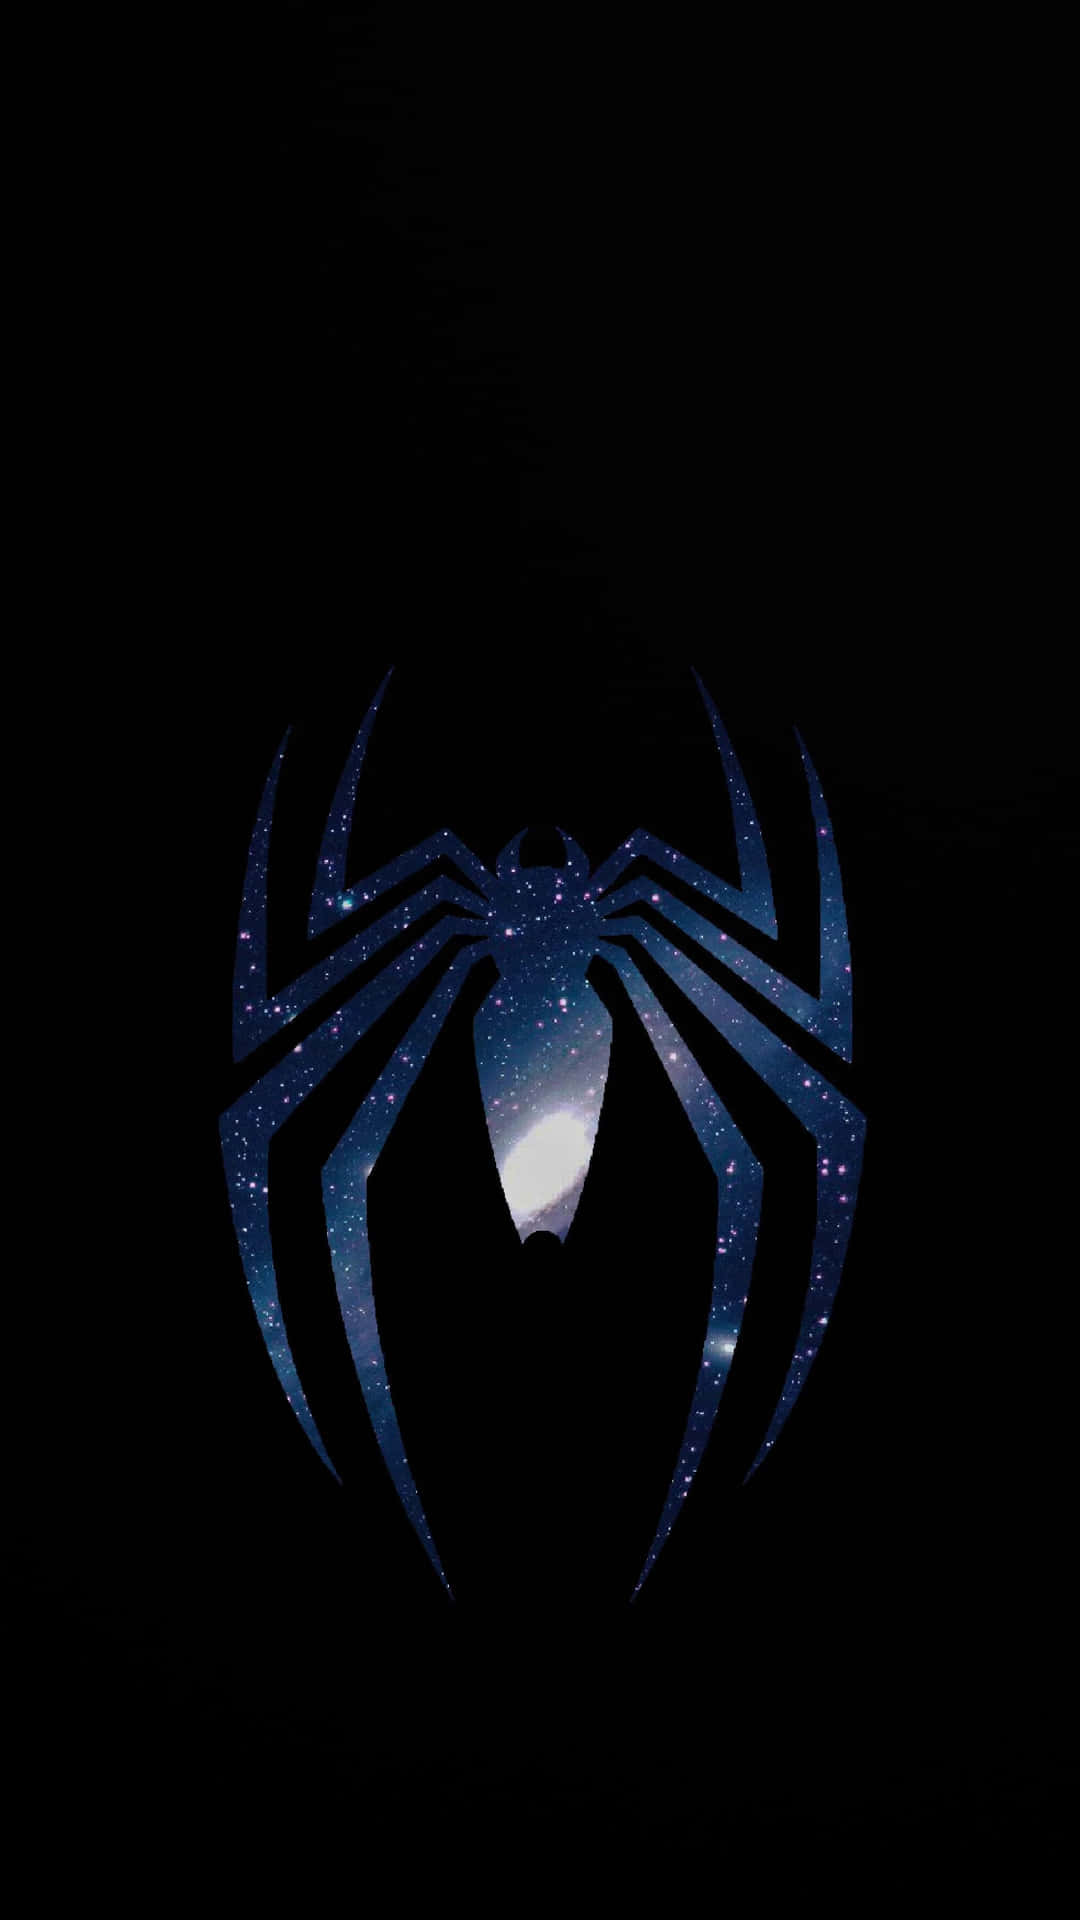 Spider - Man Logo On A Black Background